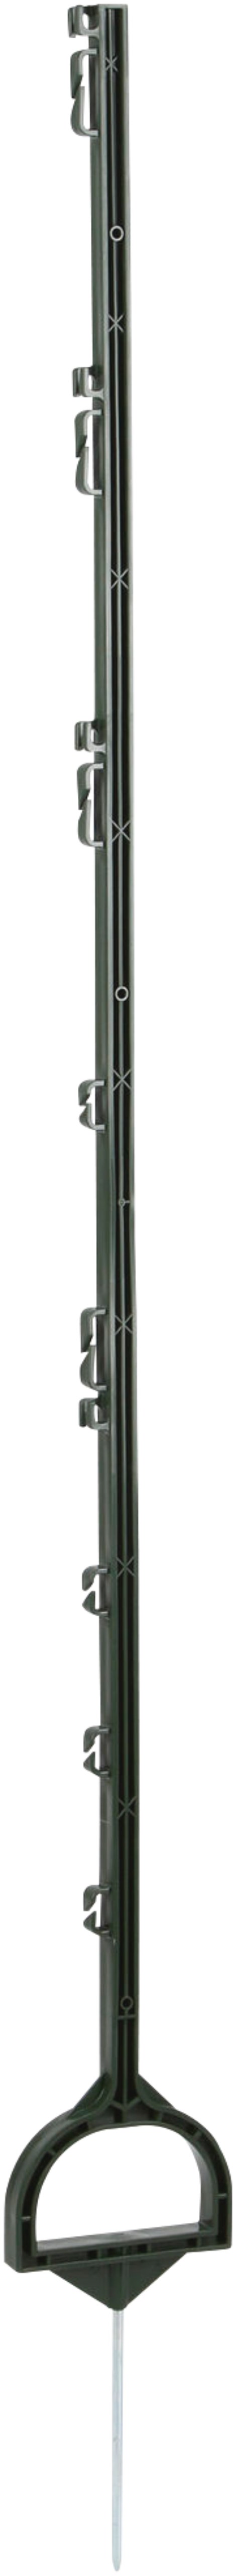 Steigbügelpfahl grün 158 cm cm, 5 Stk.